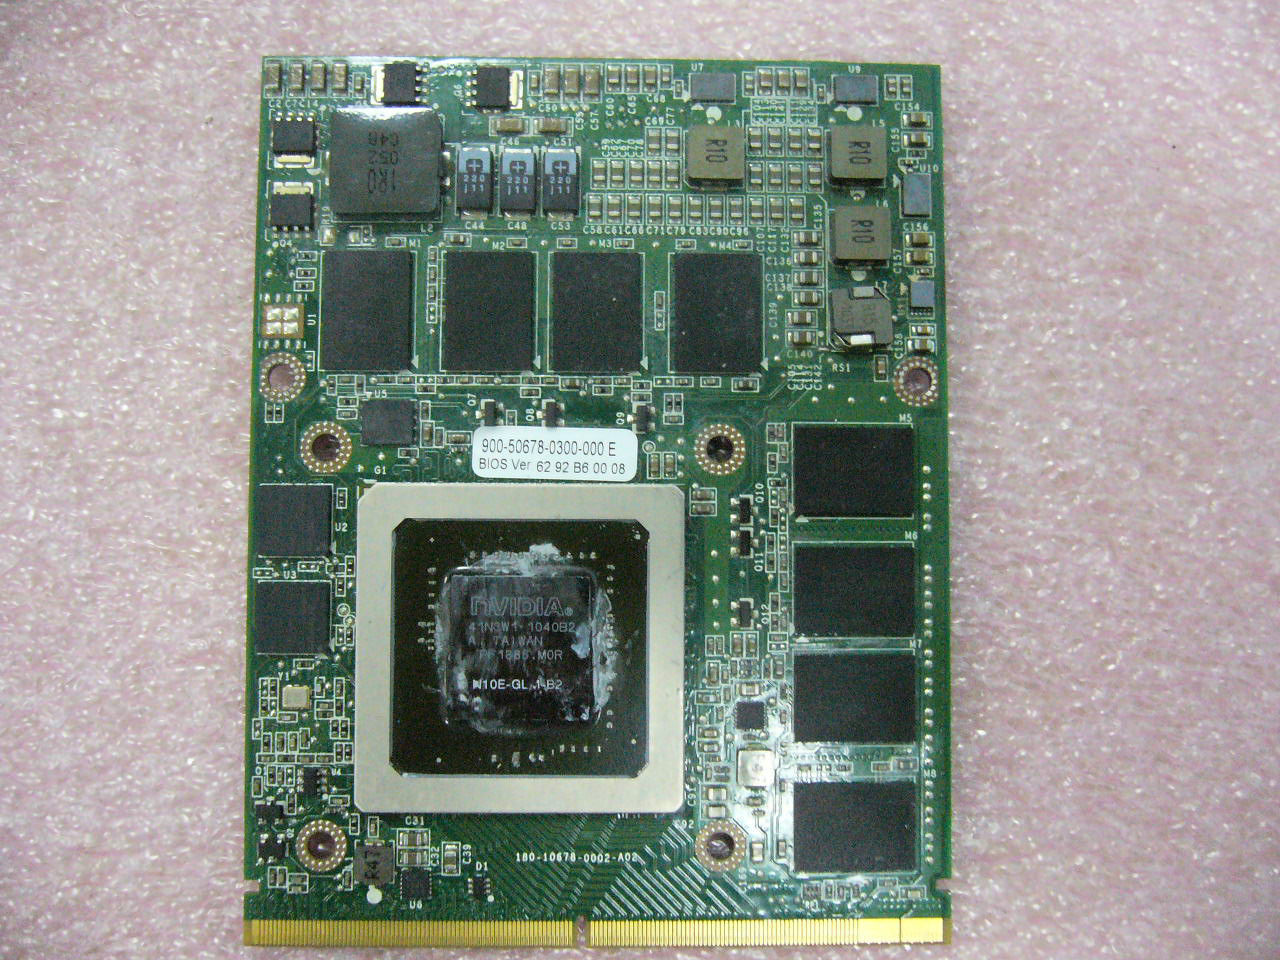 QTY 1x Nvidia Quadro FX2800M N10E-GLM 1GB Mem MXM Video Card - Click Image to Close